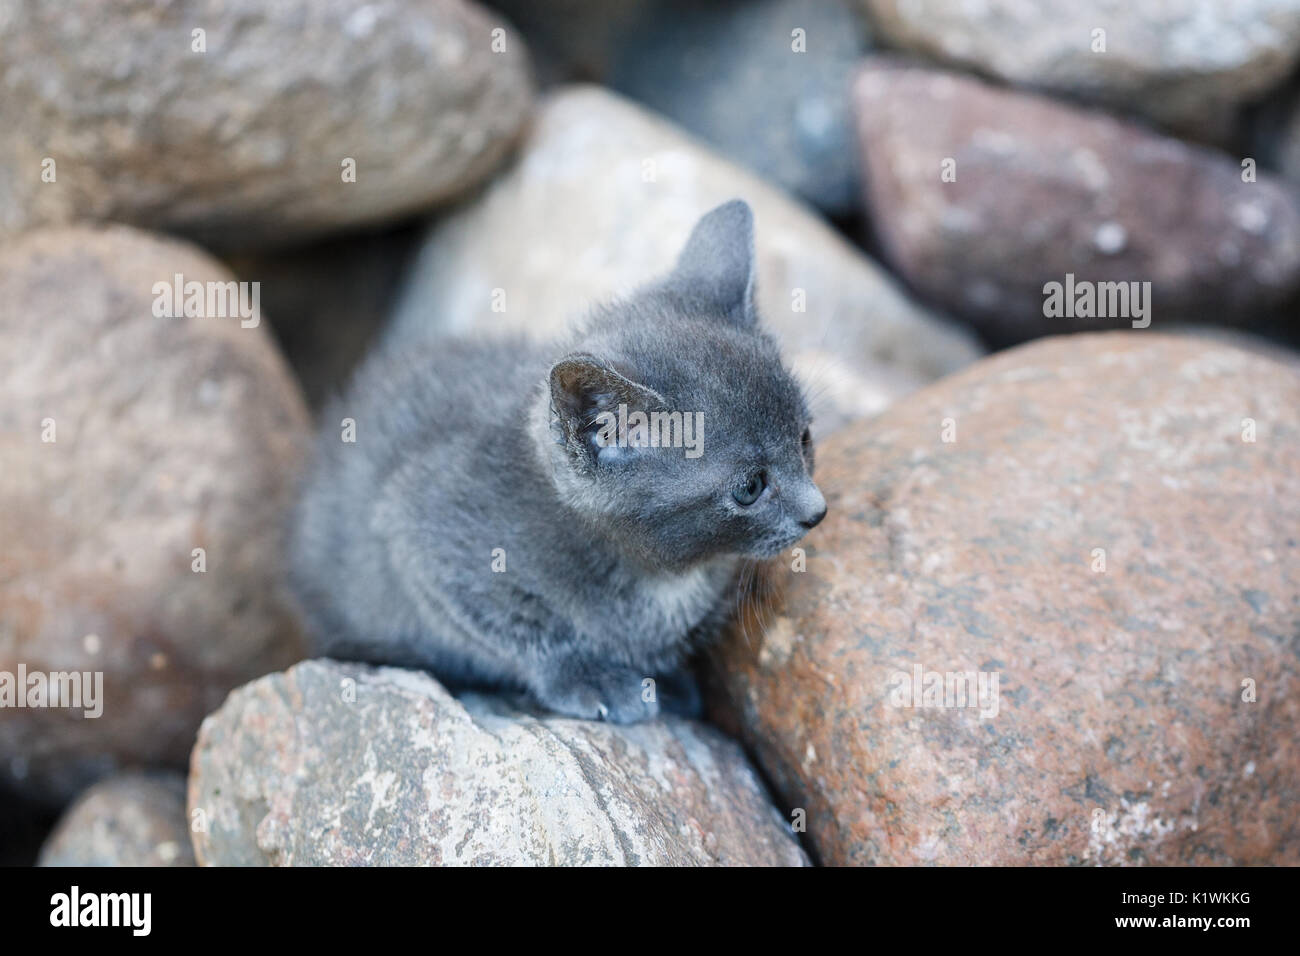 grey little cat